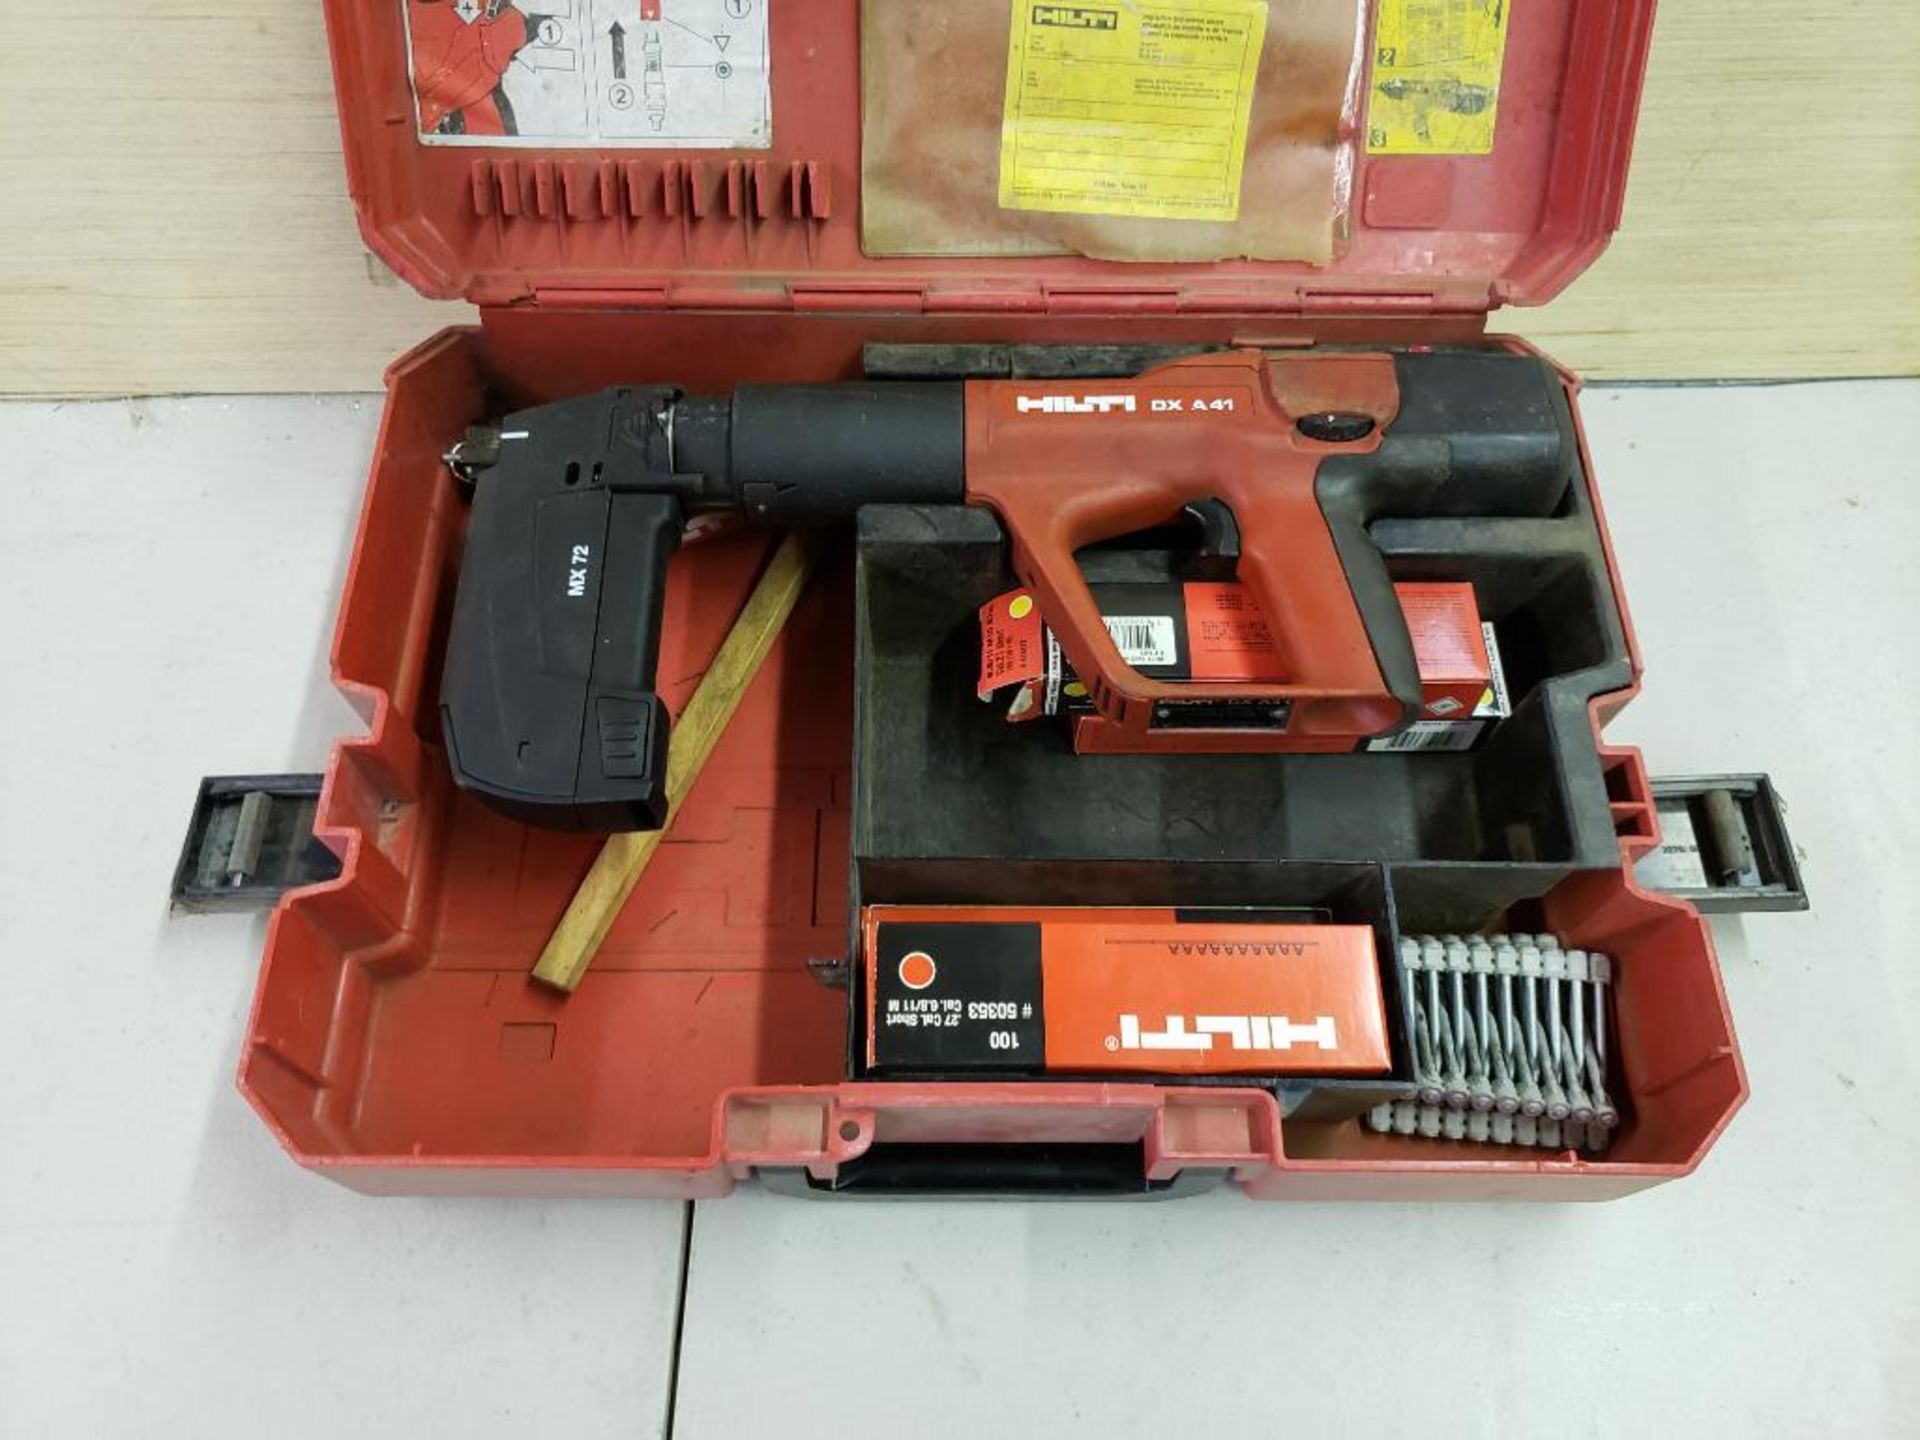 Hilti DXA41 powder actuated tool, with MX72 magazine.